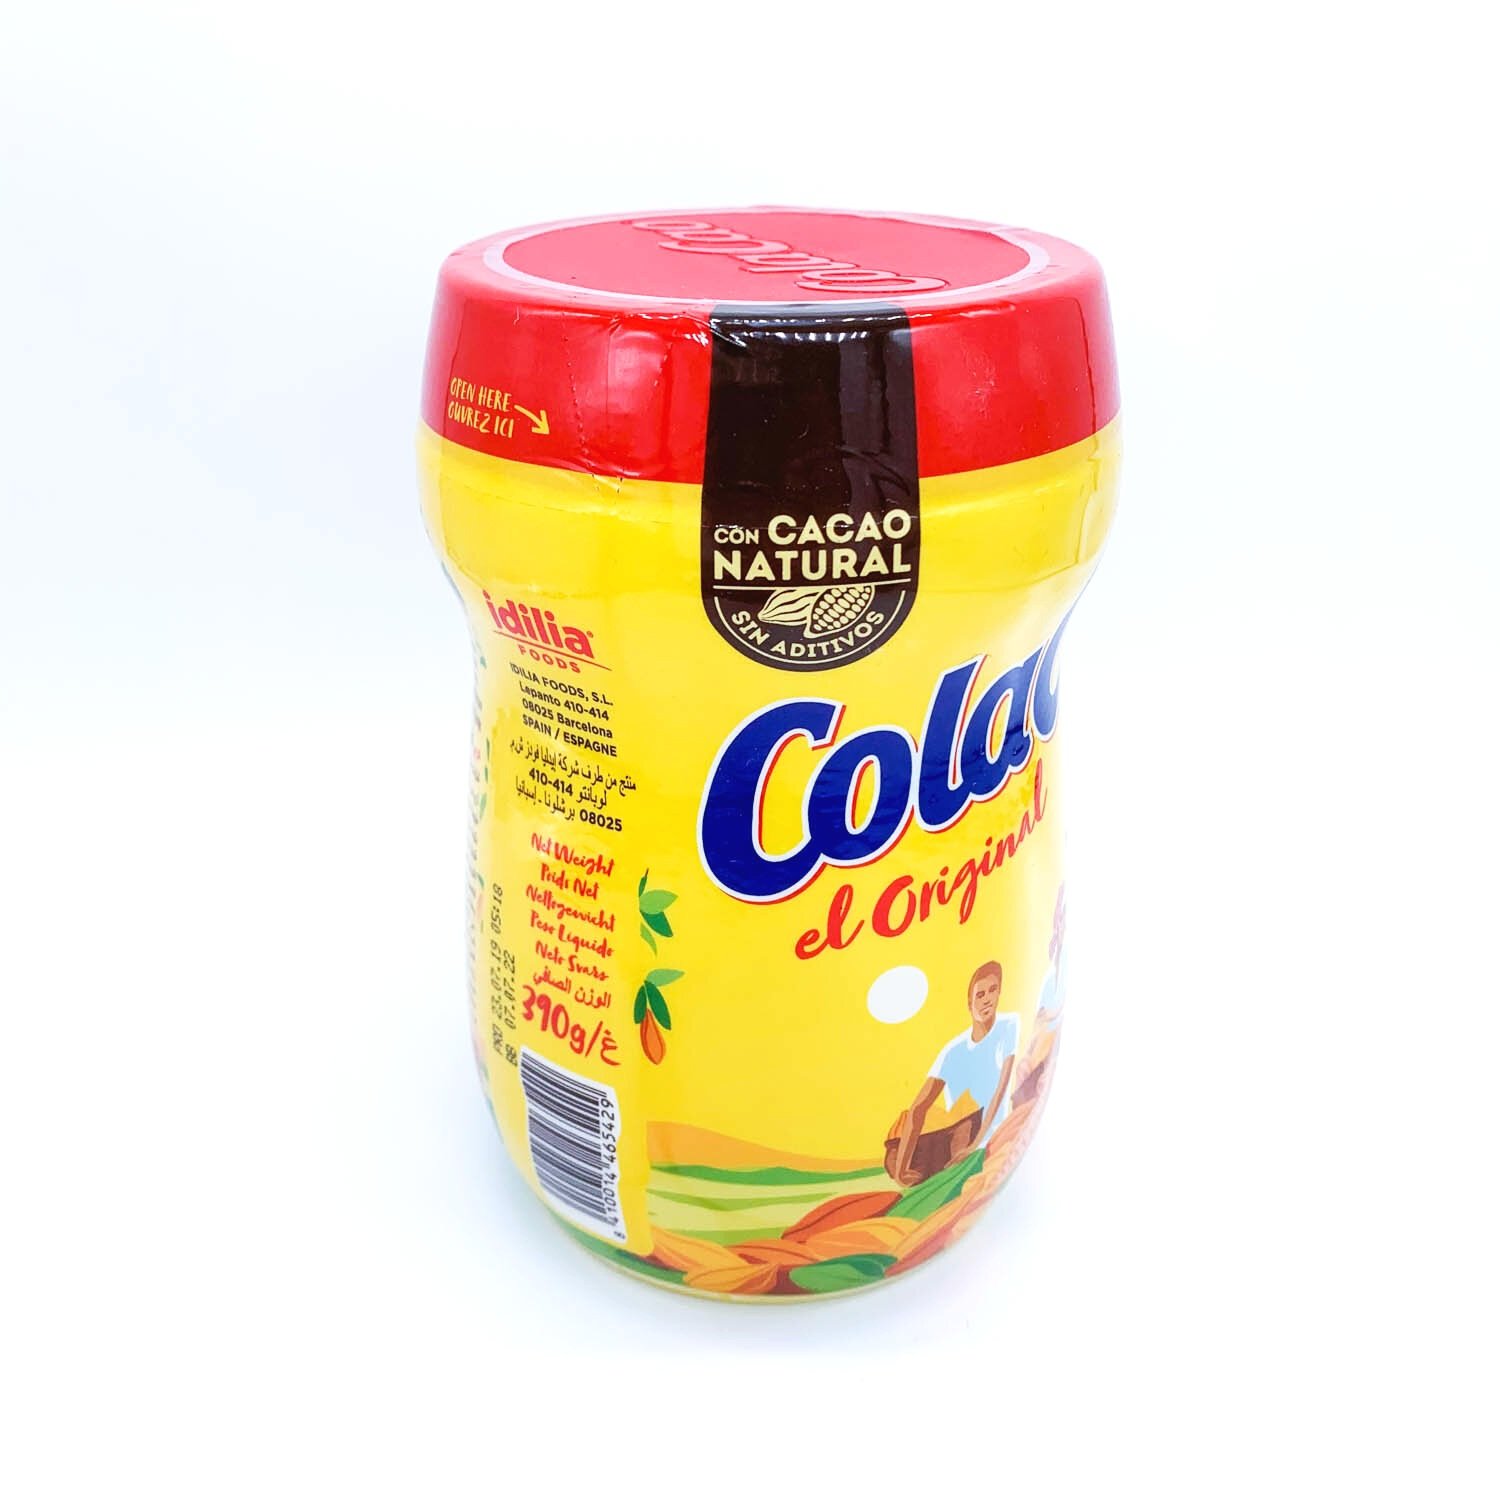 Cola Cao drink - Original recipe — Omar Allibhoy - The Spanish Chef